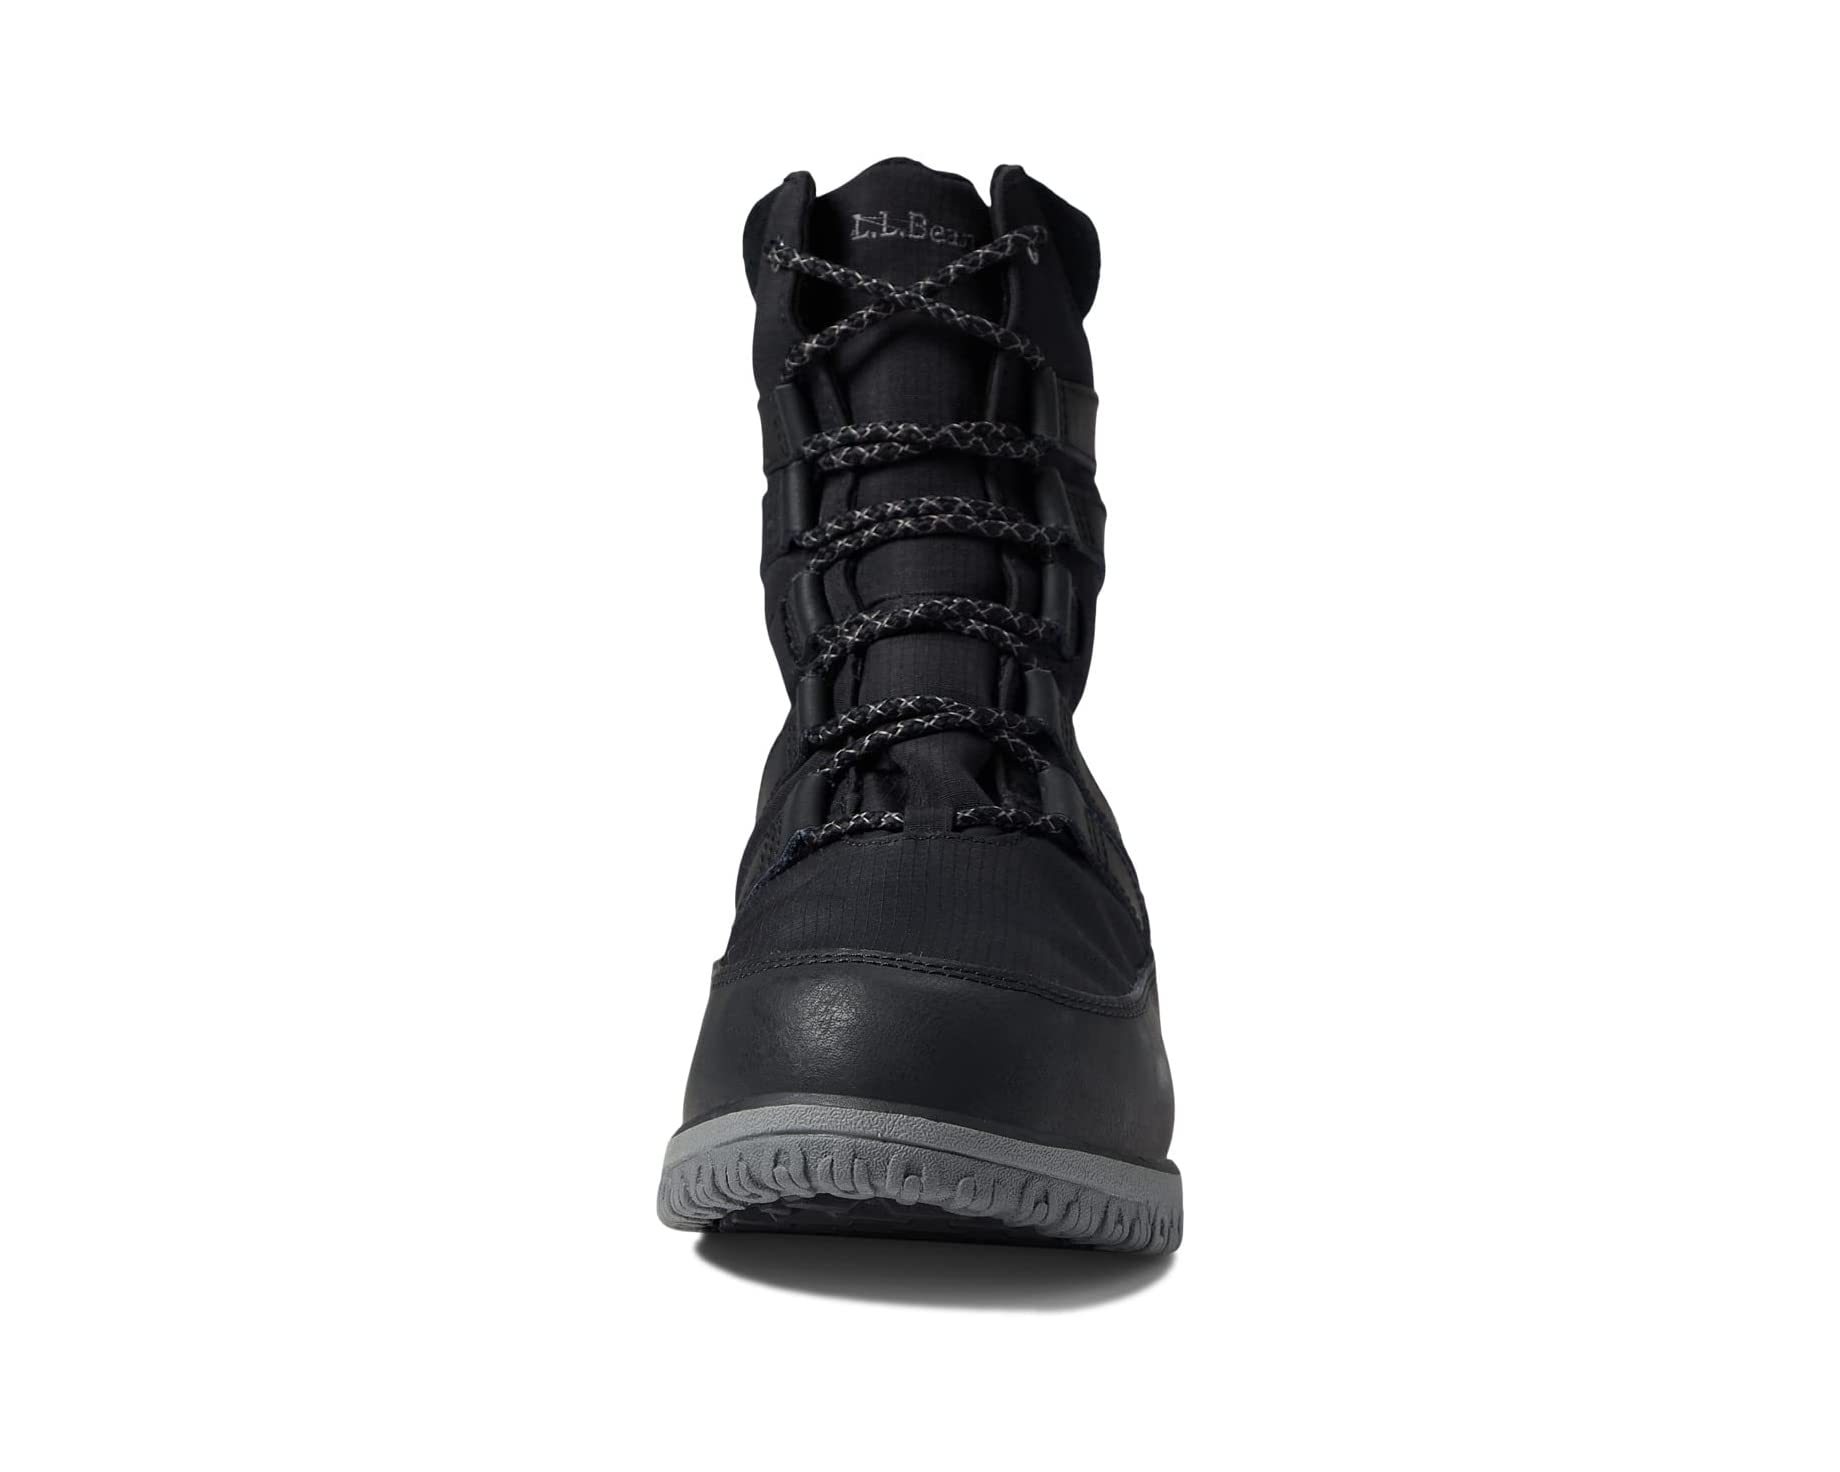 Ботинки Ultralight Boot Mid Waterproof Insulated L.L.Bean, черный ботинки wrangler spike mid черный